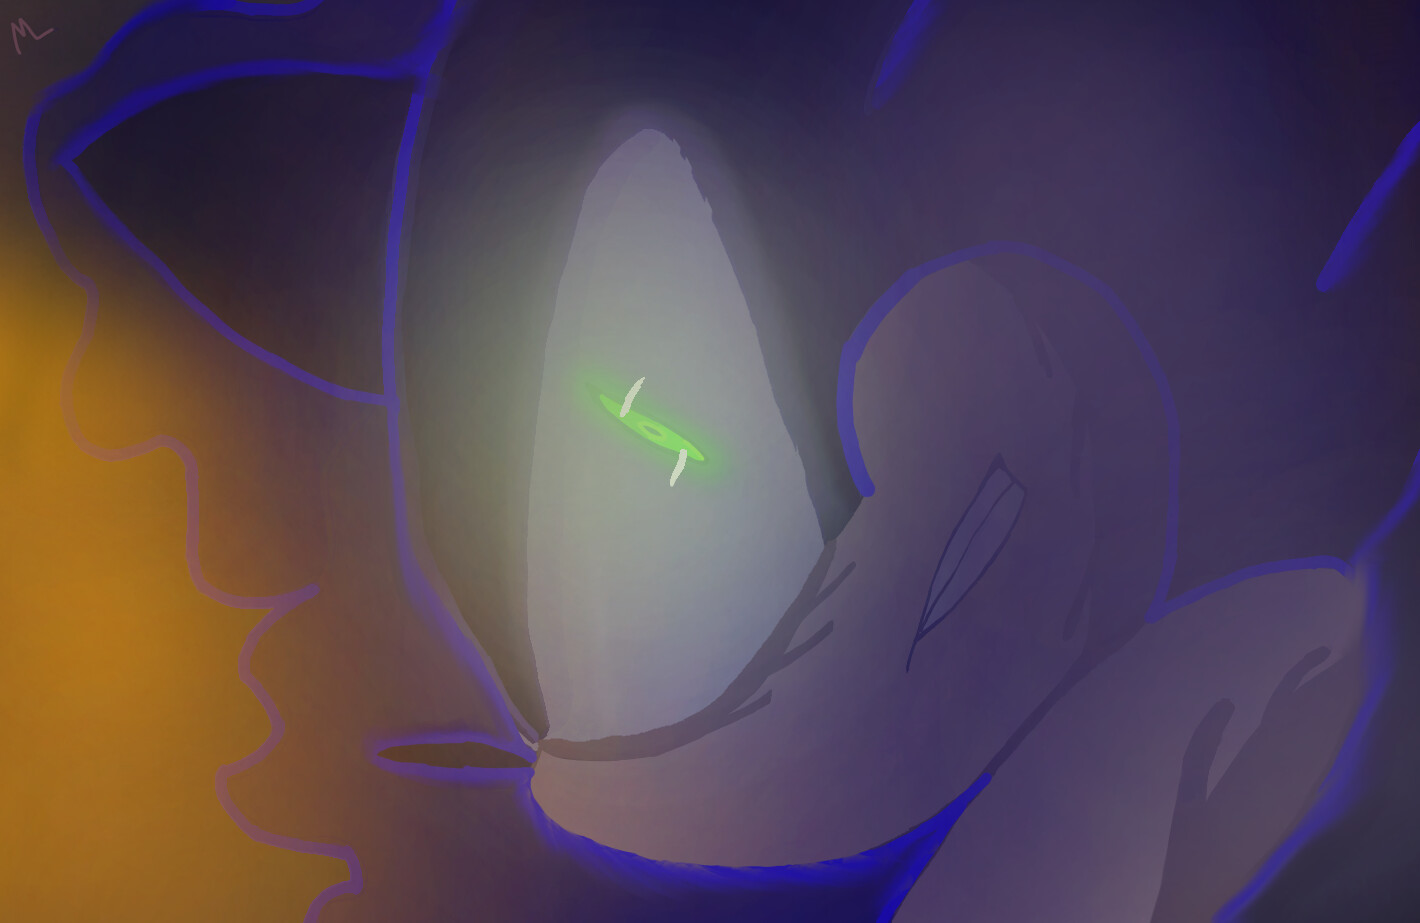 ArtStation - Team Dark in Sonic the Movie Style.